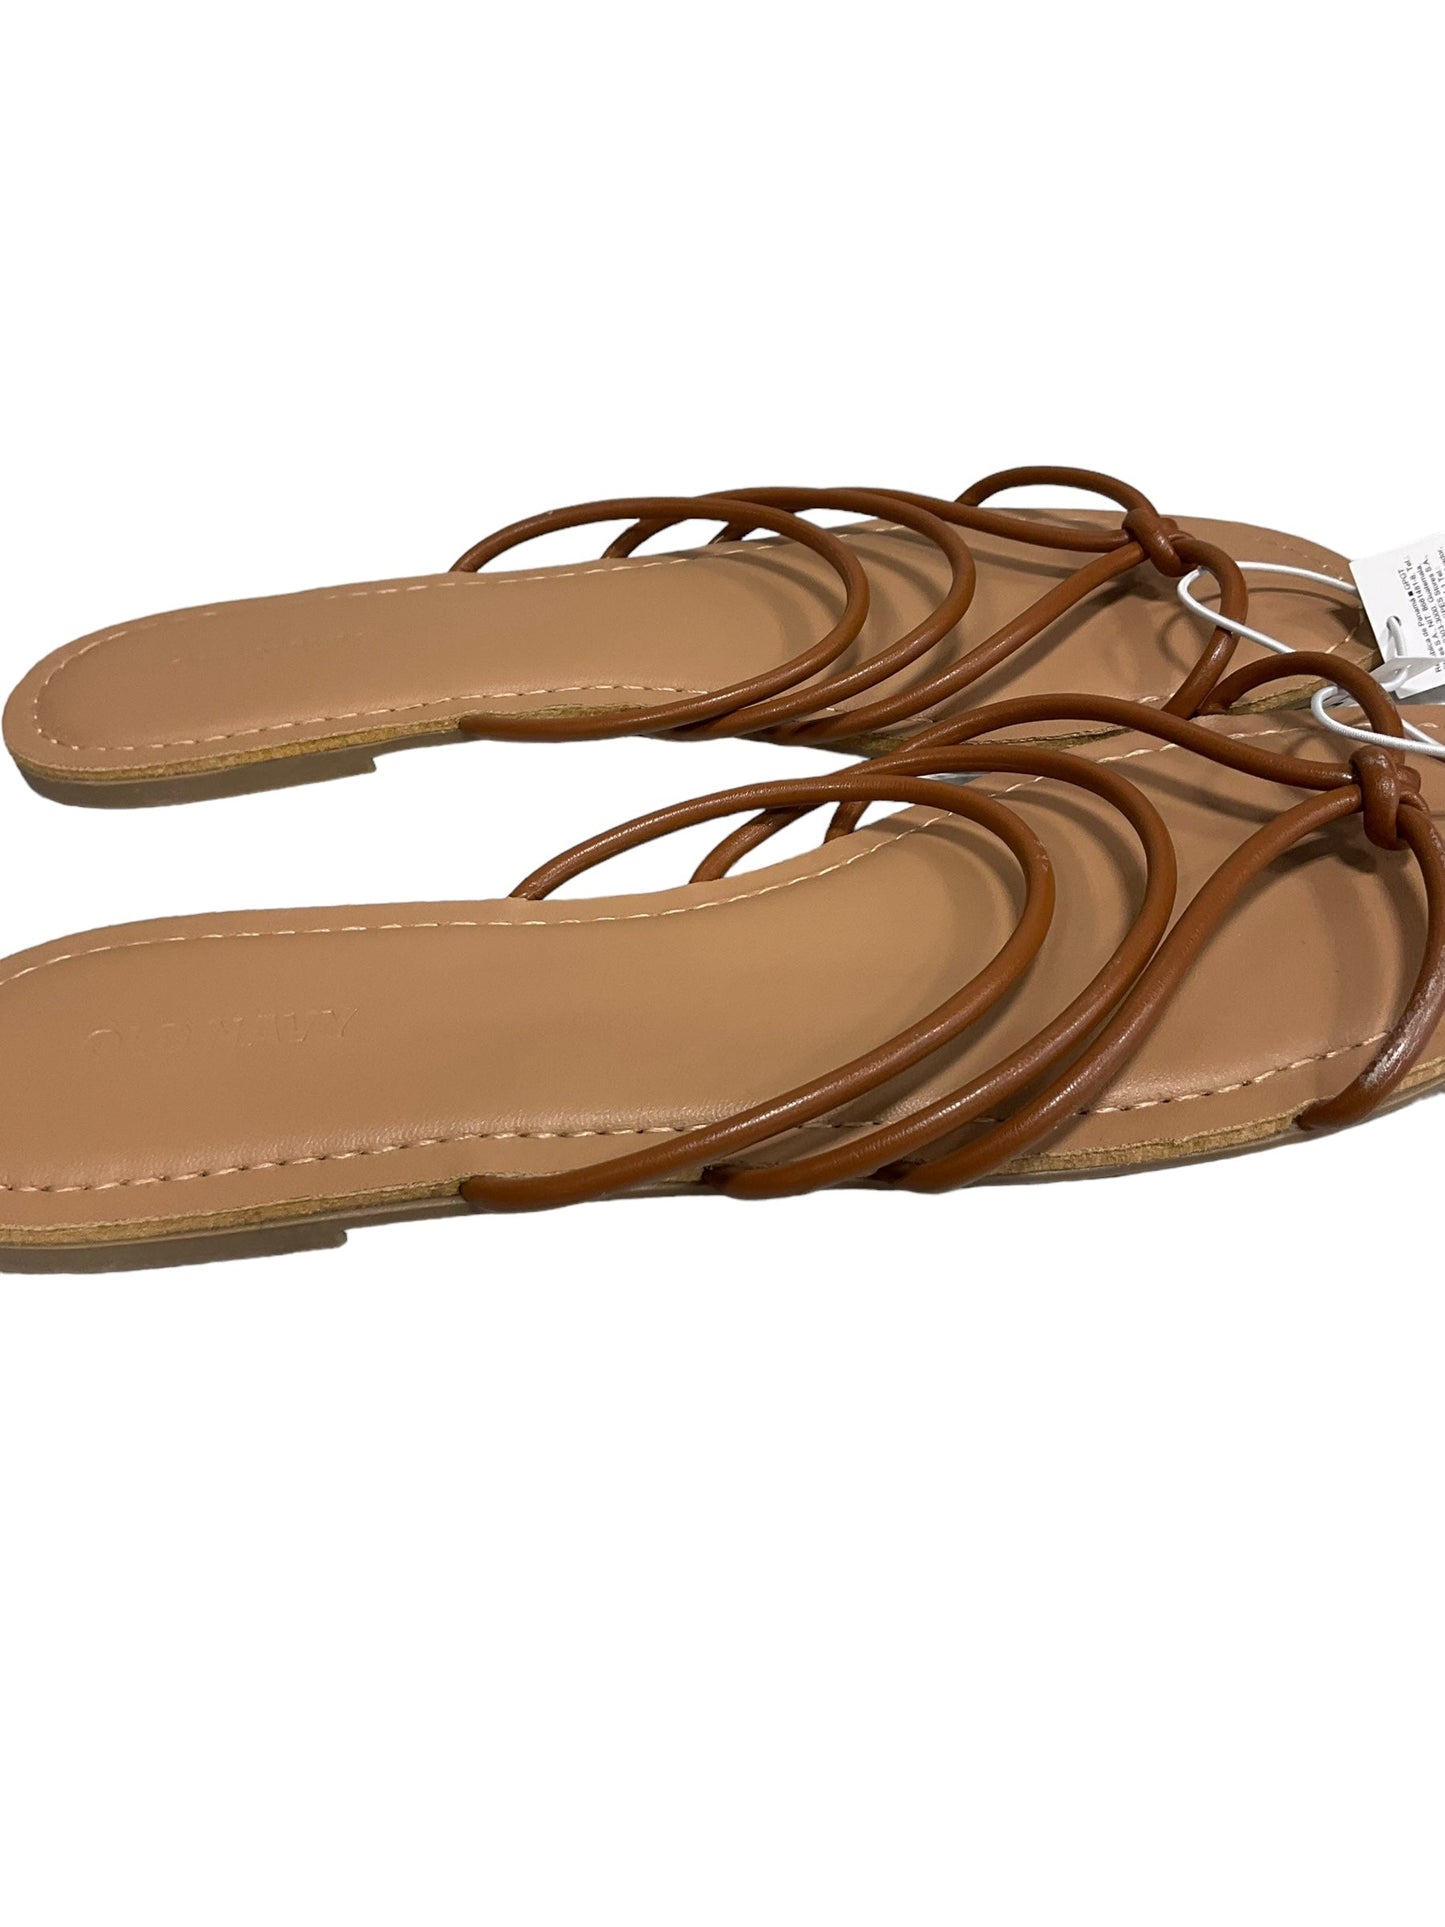 Tan Sandals Flip Flops Old Navy, Size 9